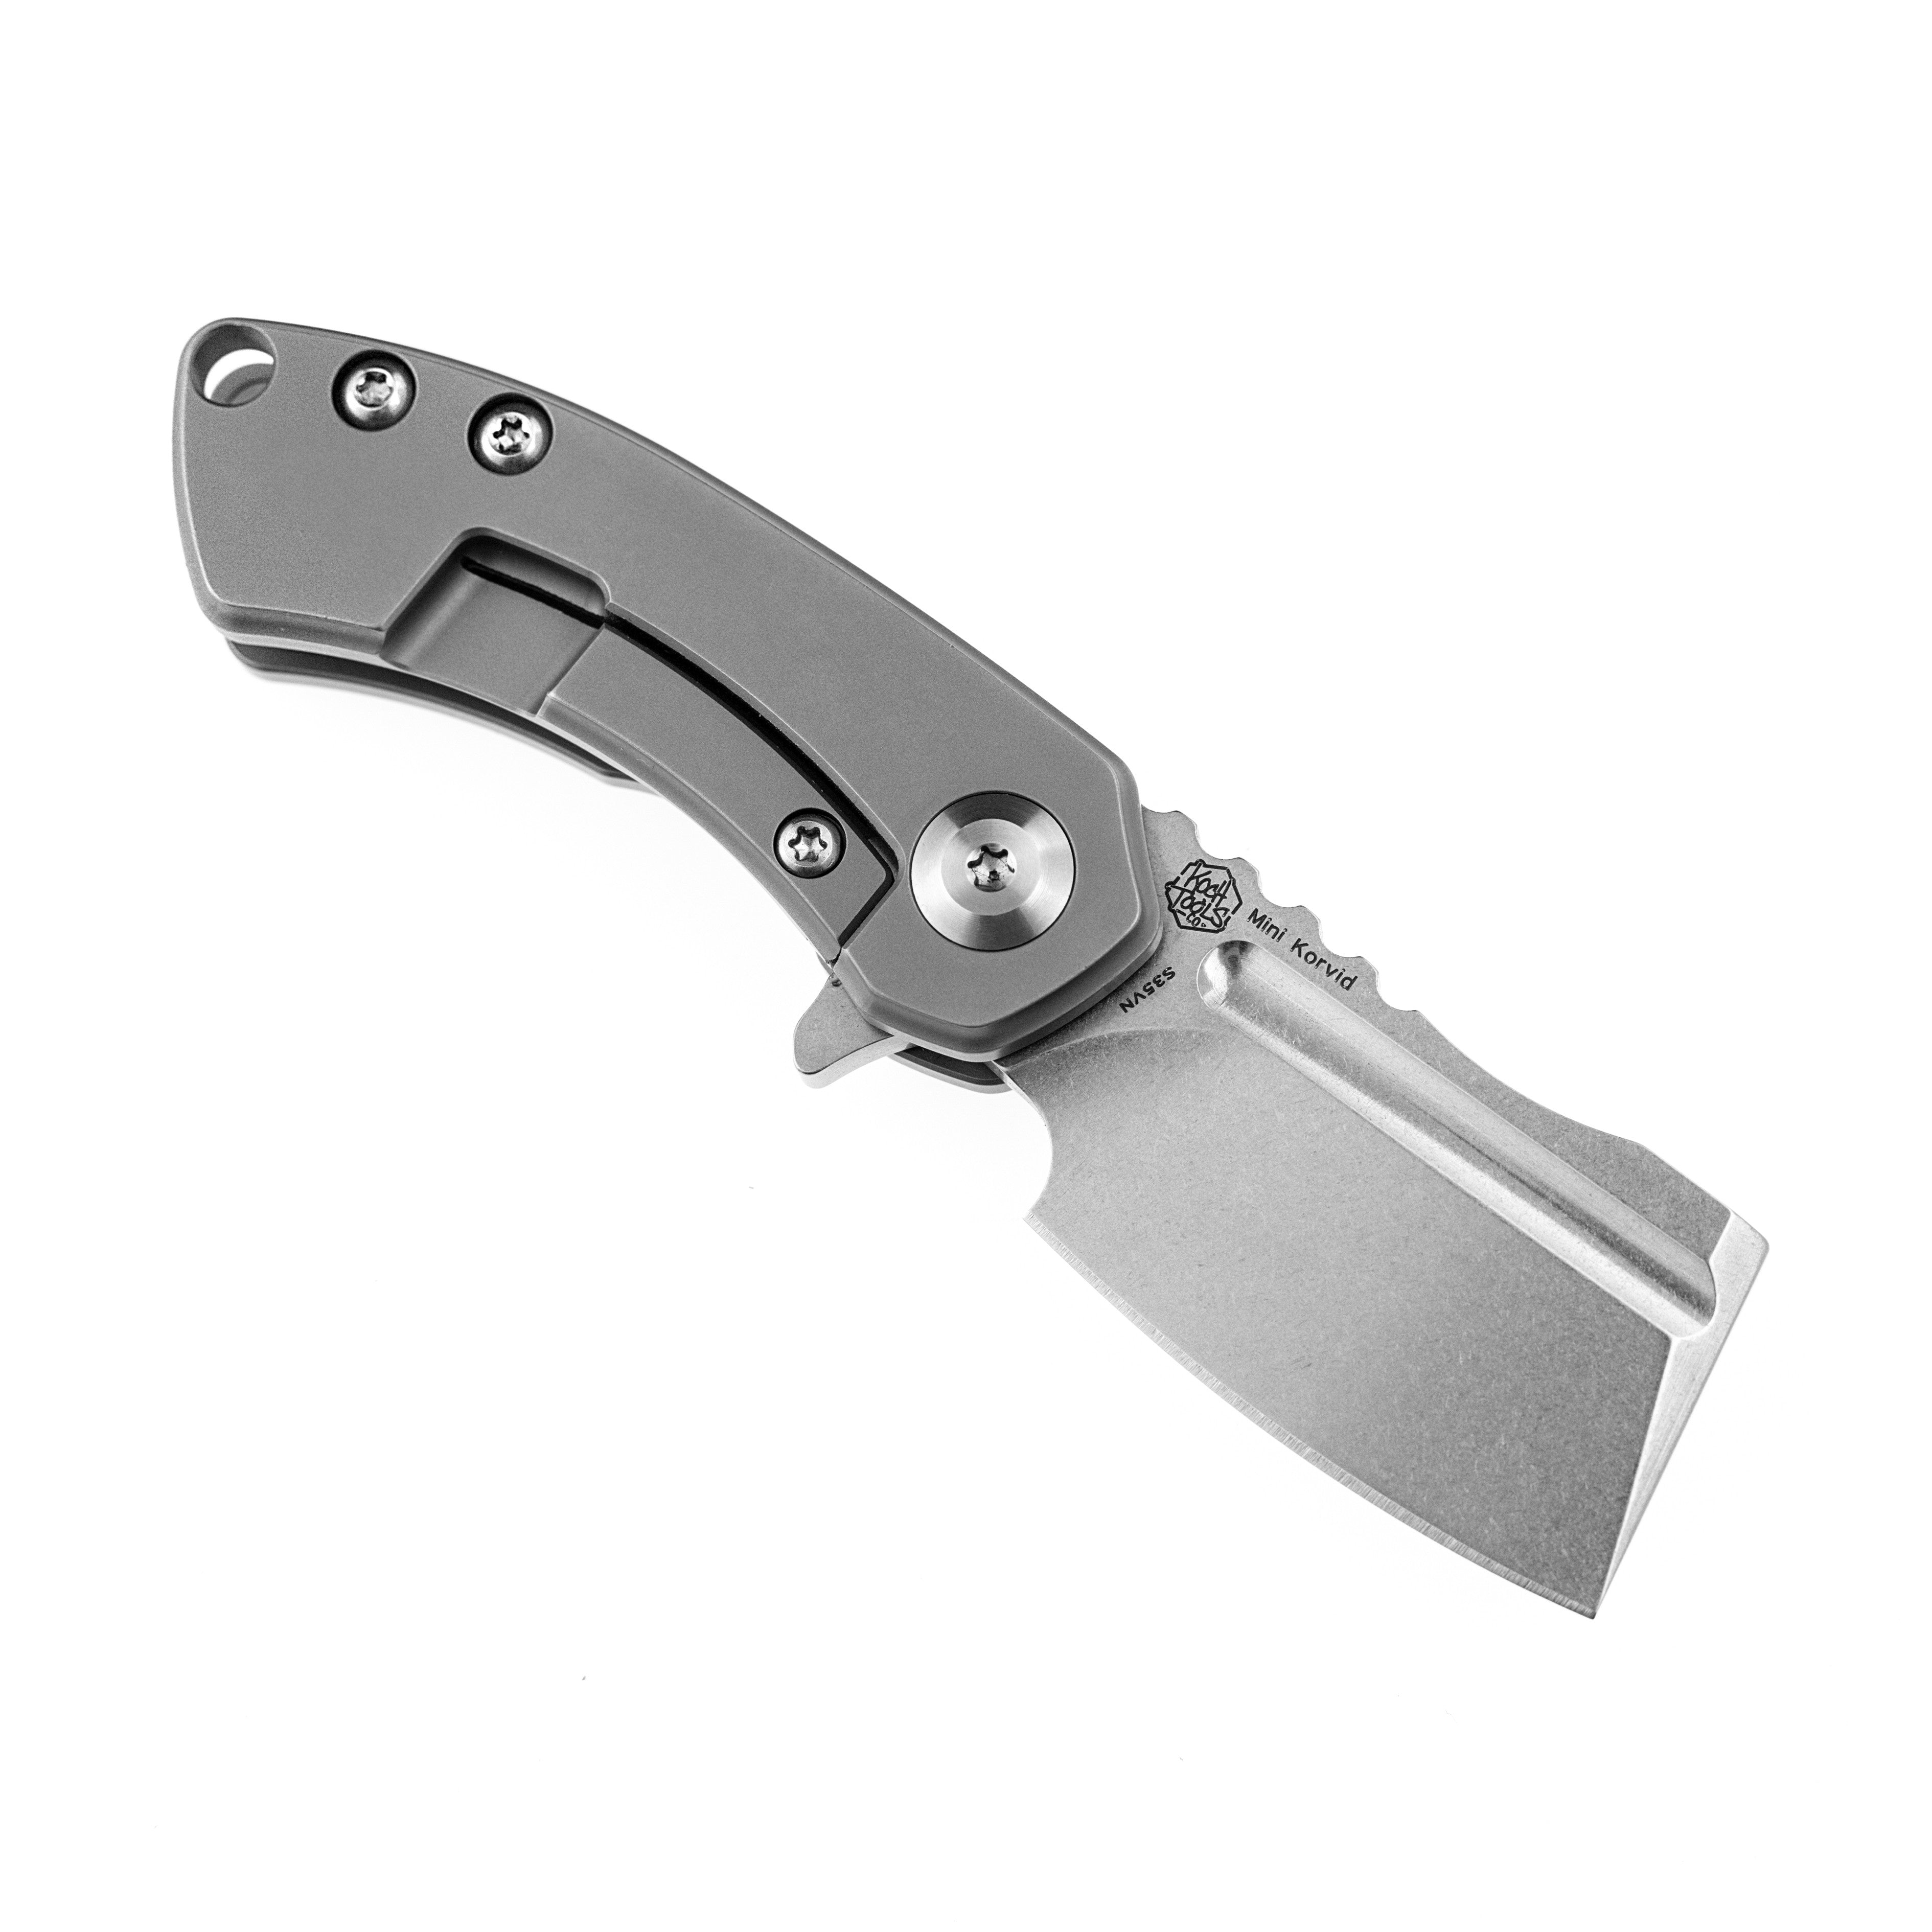 Kansept 刀具 Mini Korvid K3030A5 S35VN 刀片渐变钛手柄框架锁